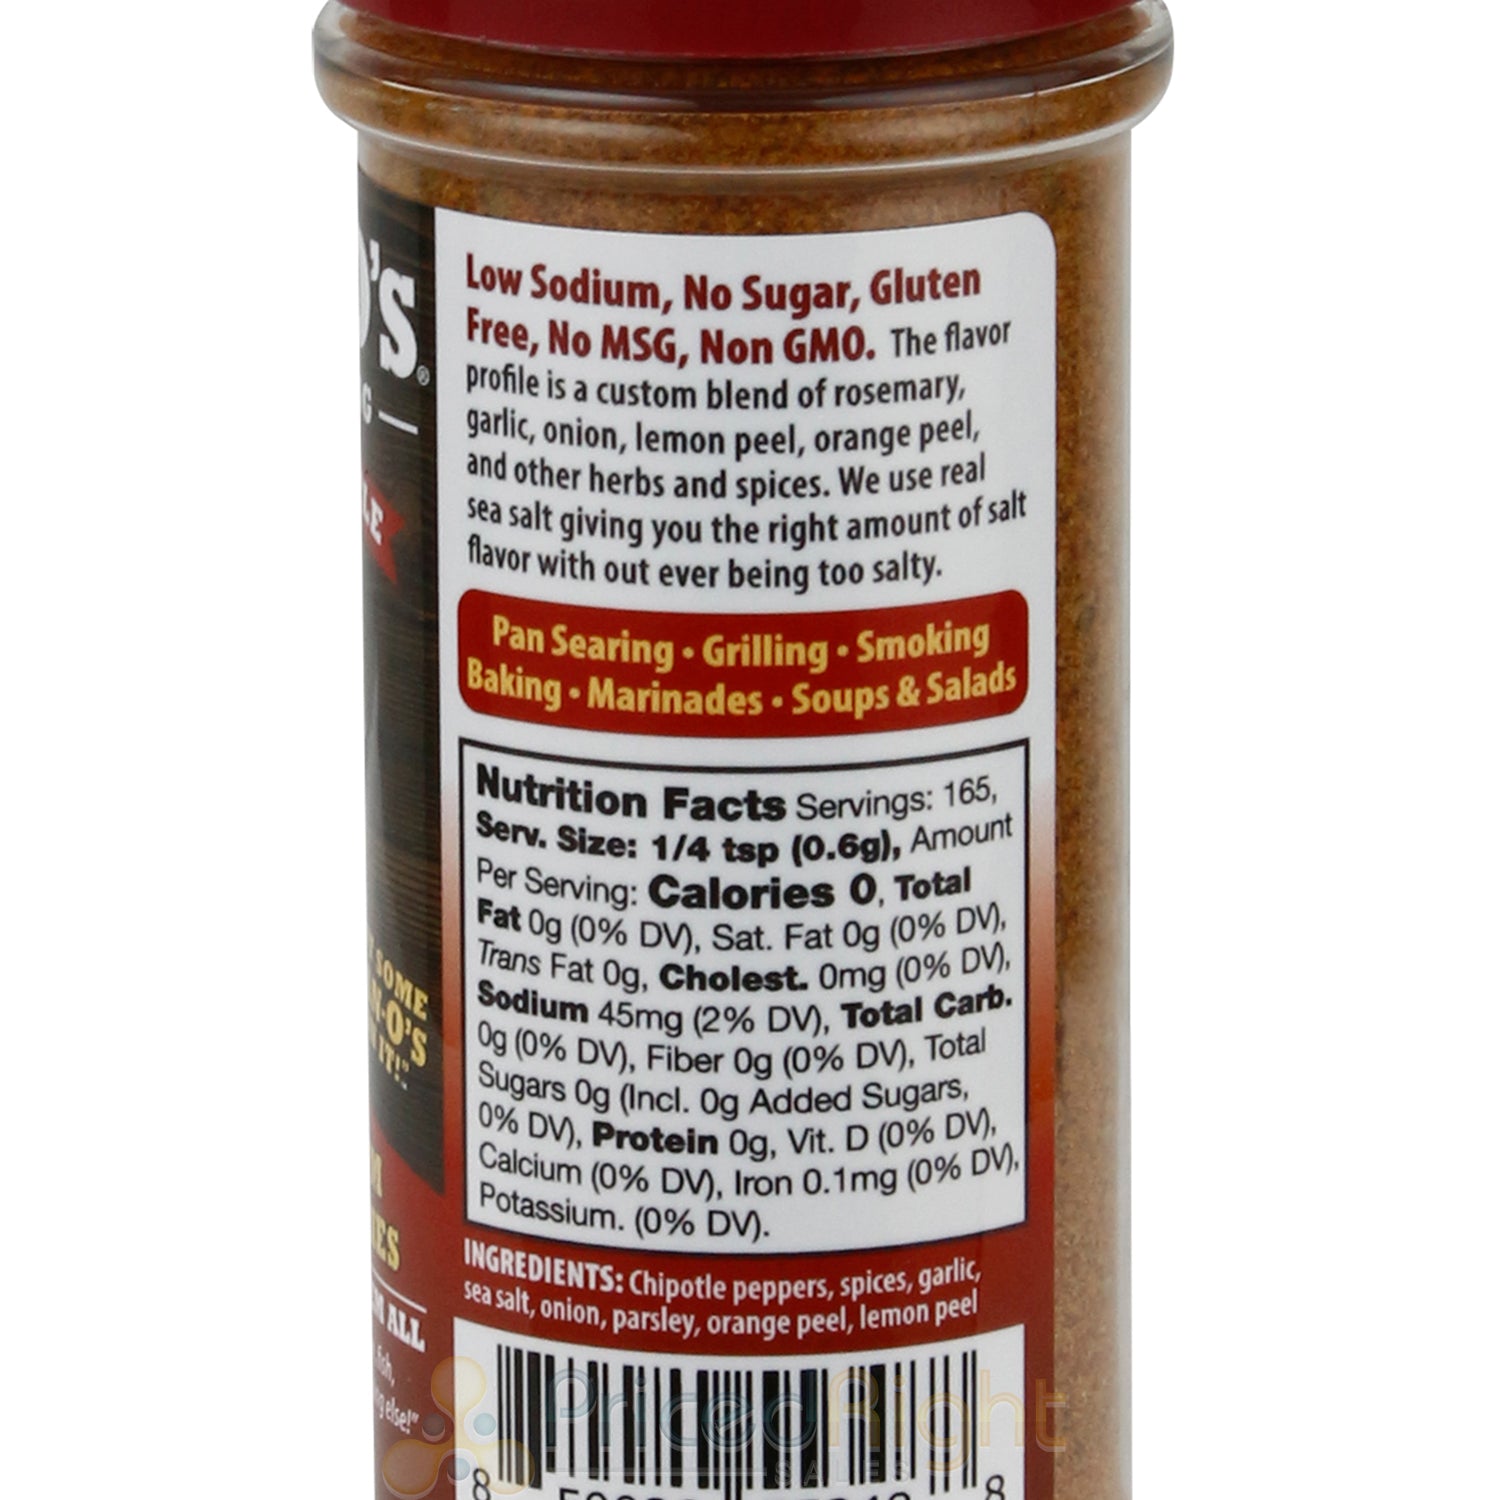 Dan-O's Spicy Seasoning - All-Natural, Low Sodium, Zero Sugar, 3.5oz